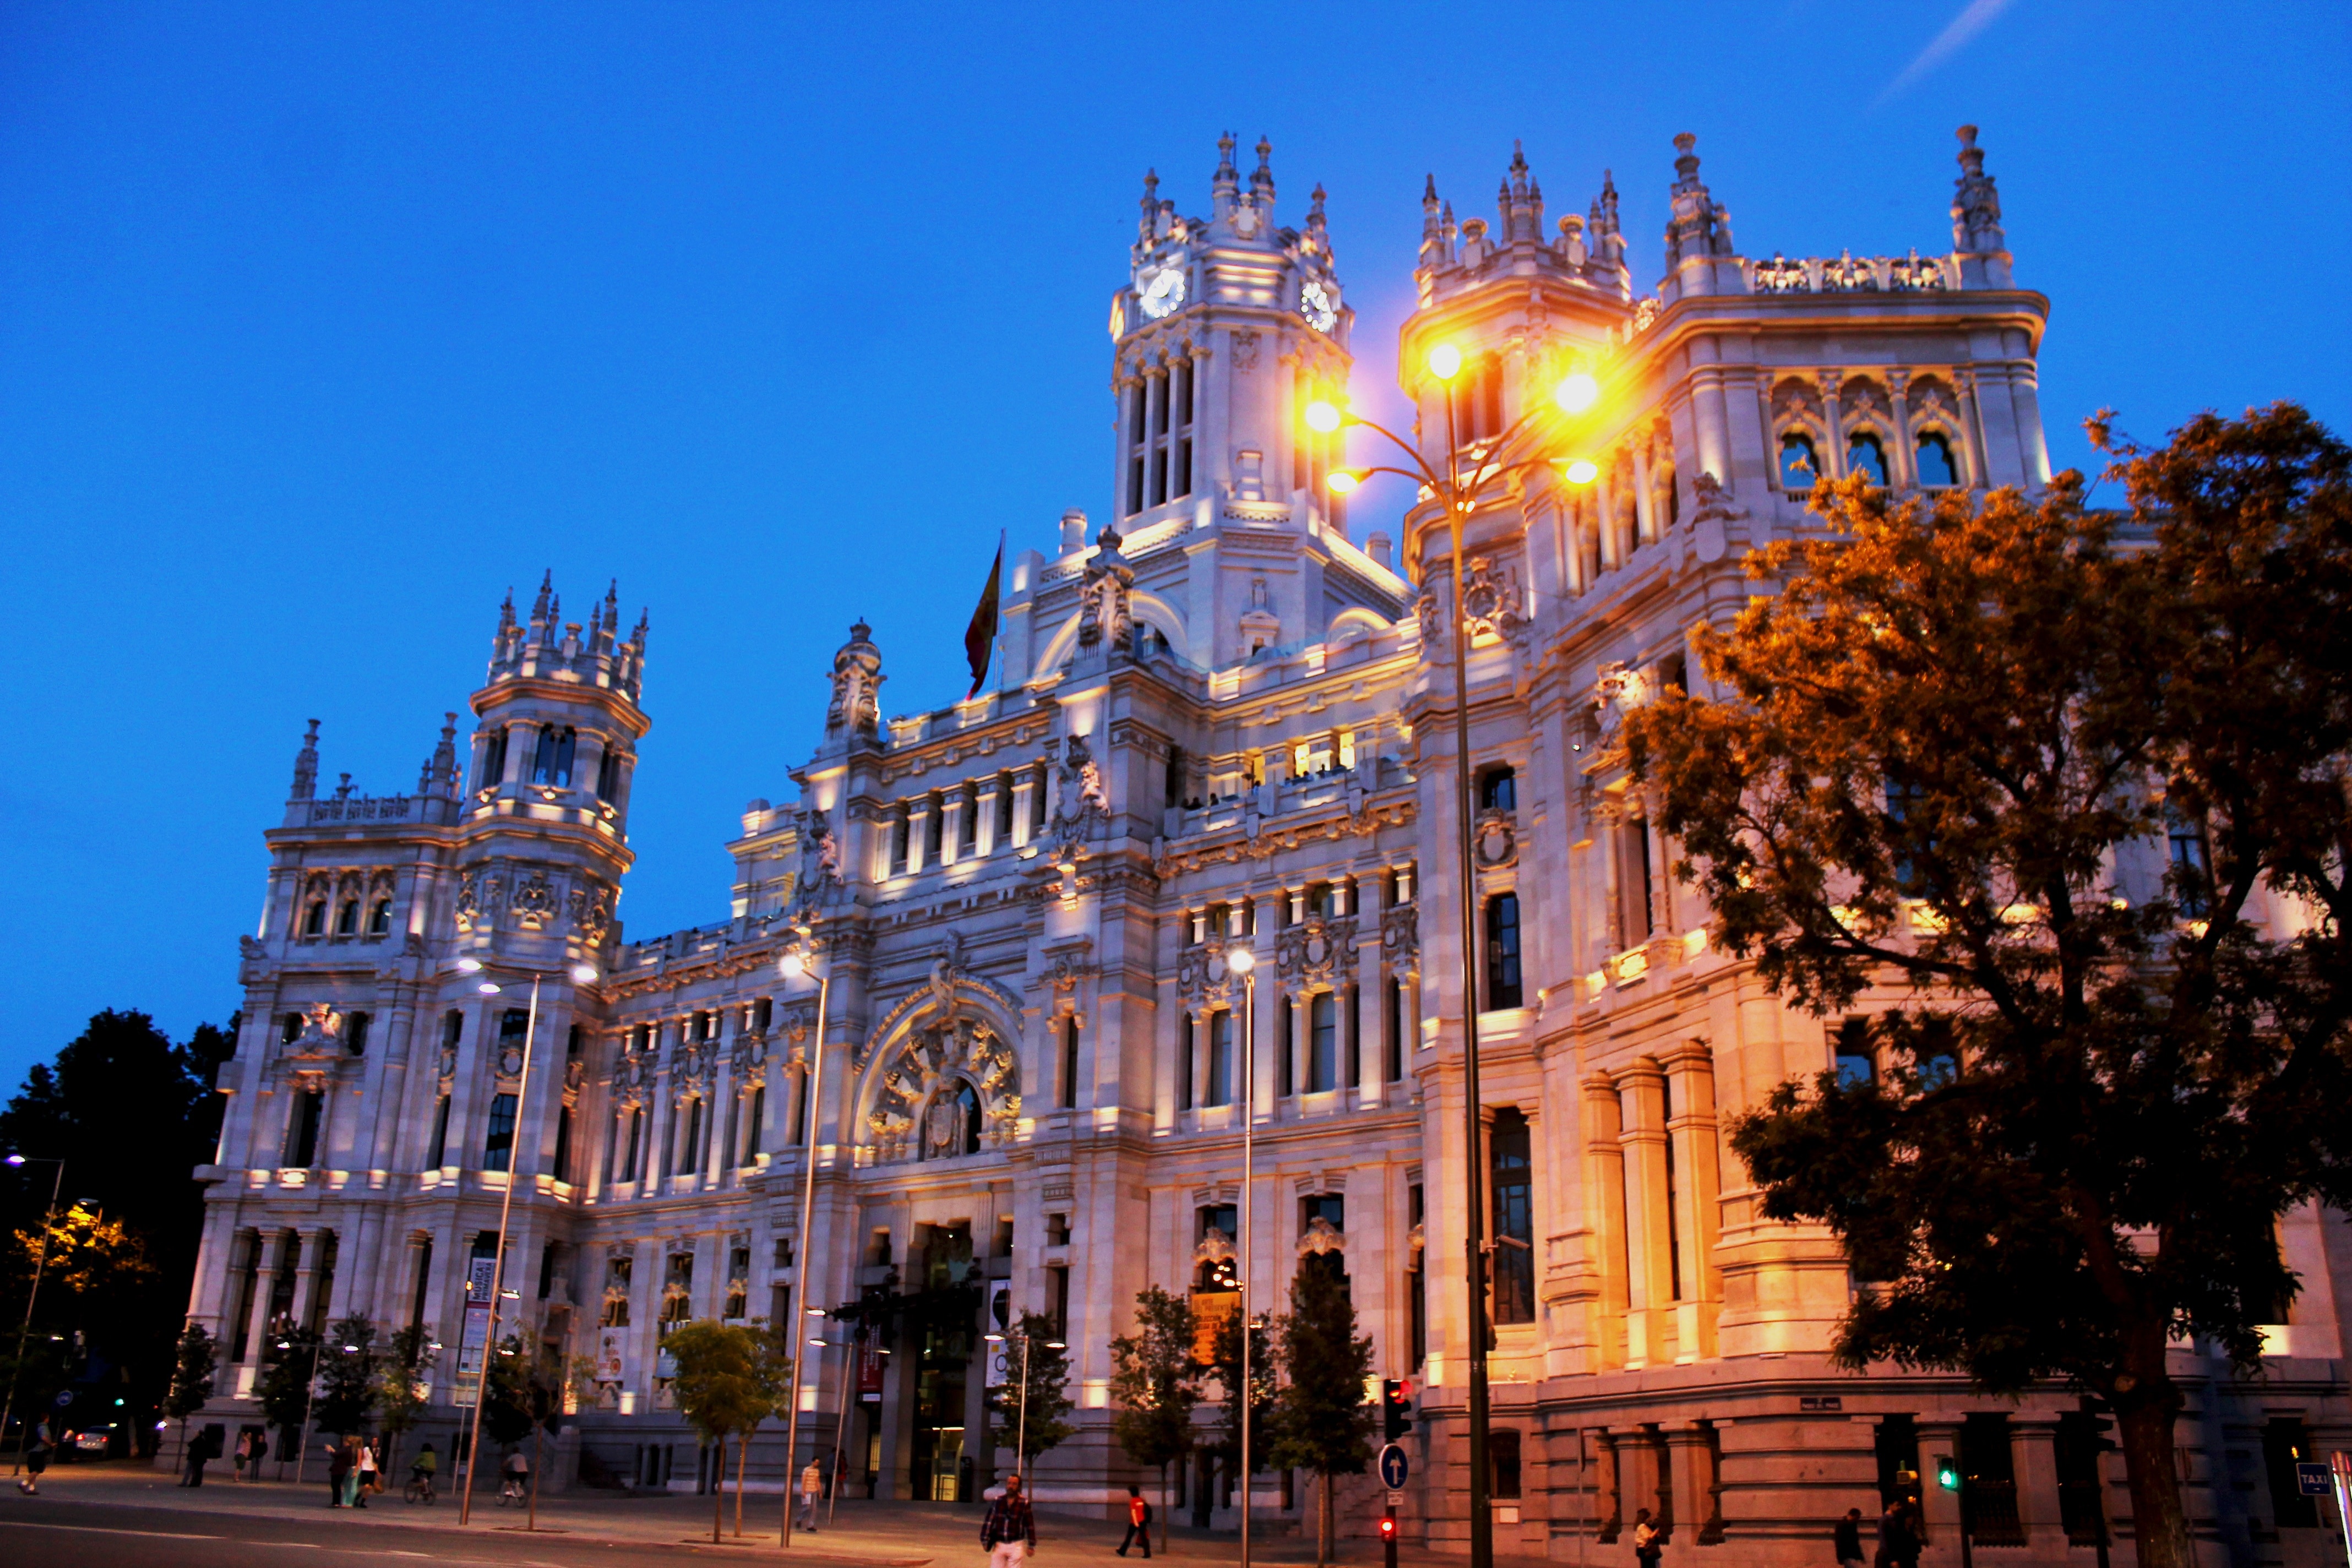 Architecture, Madrid, Capital, Spain, architecture, building exterior